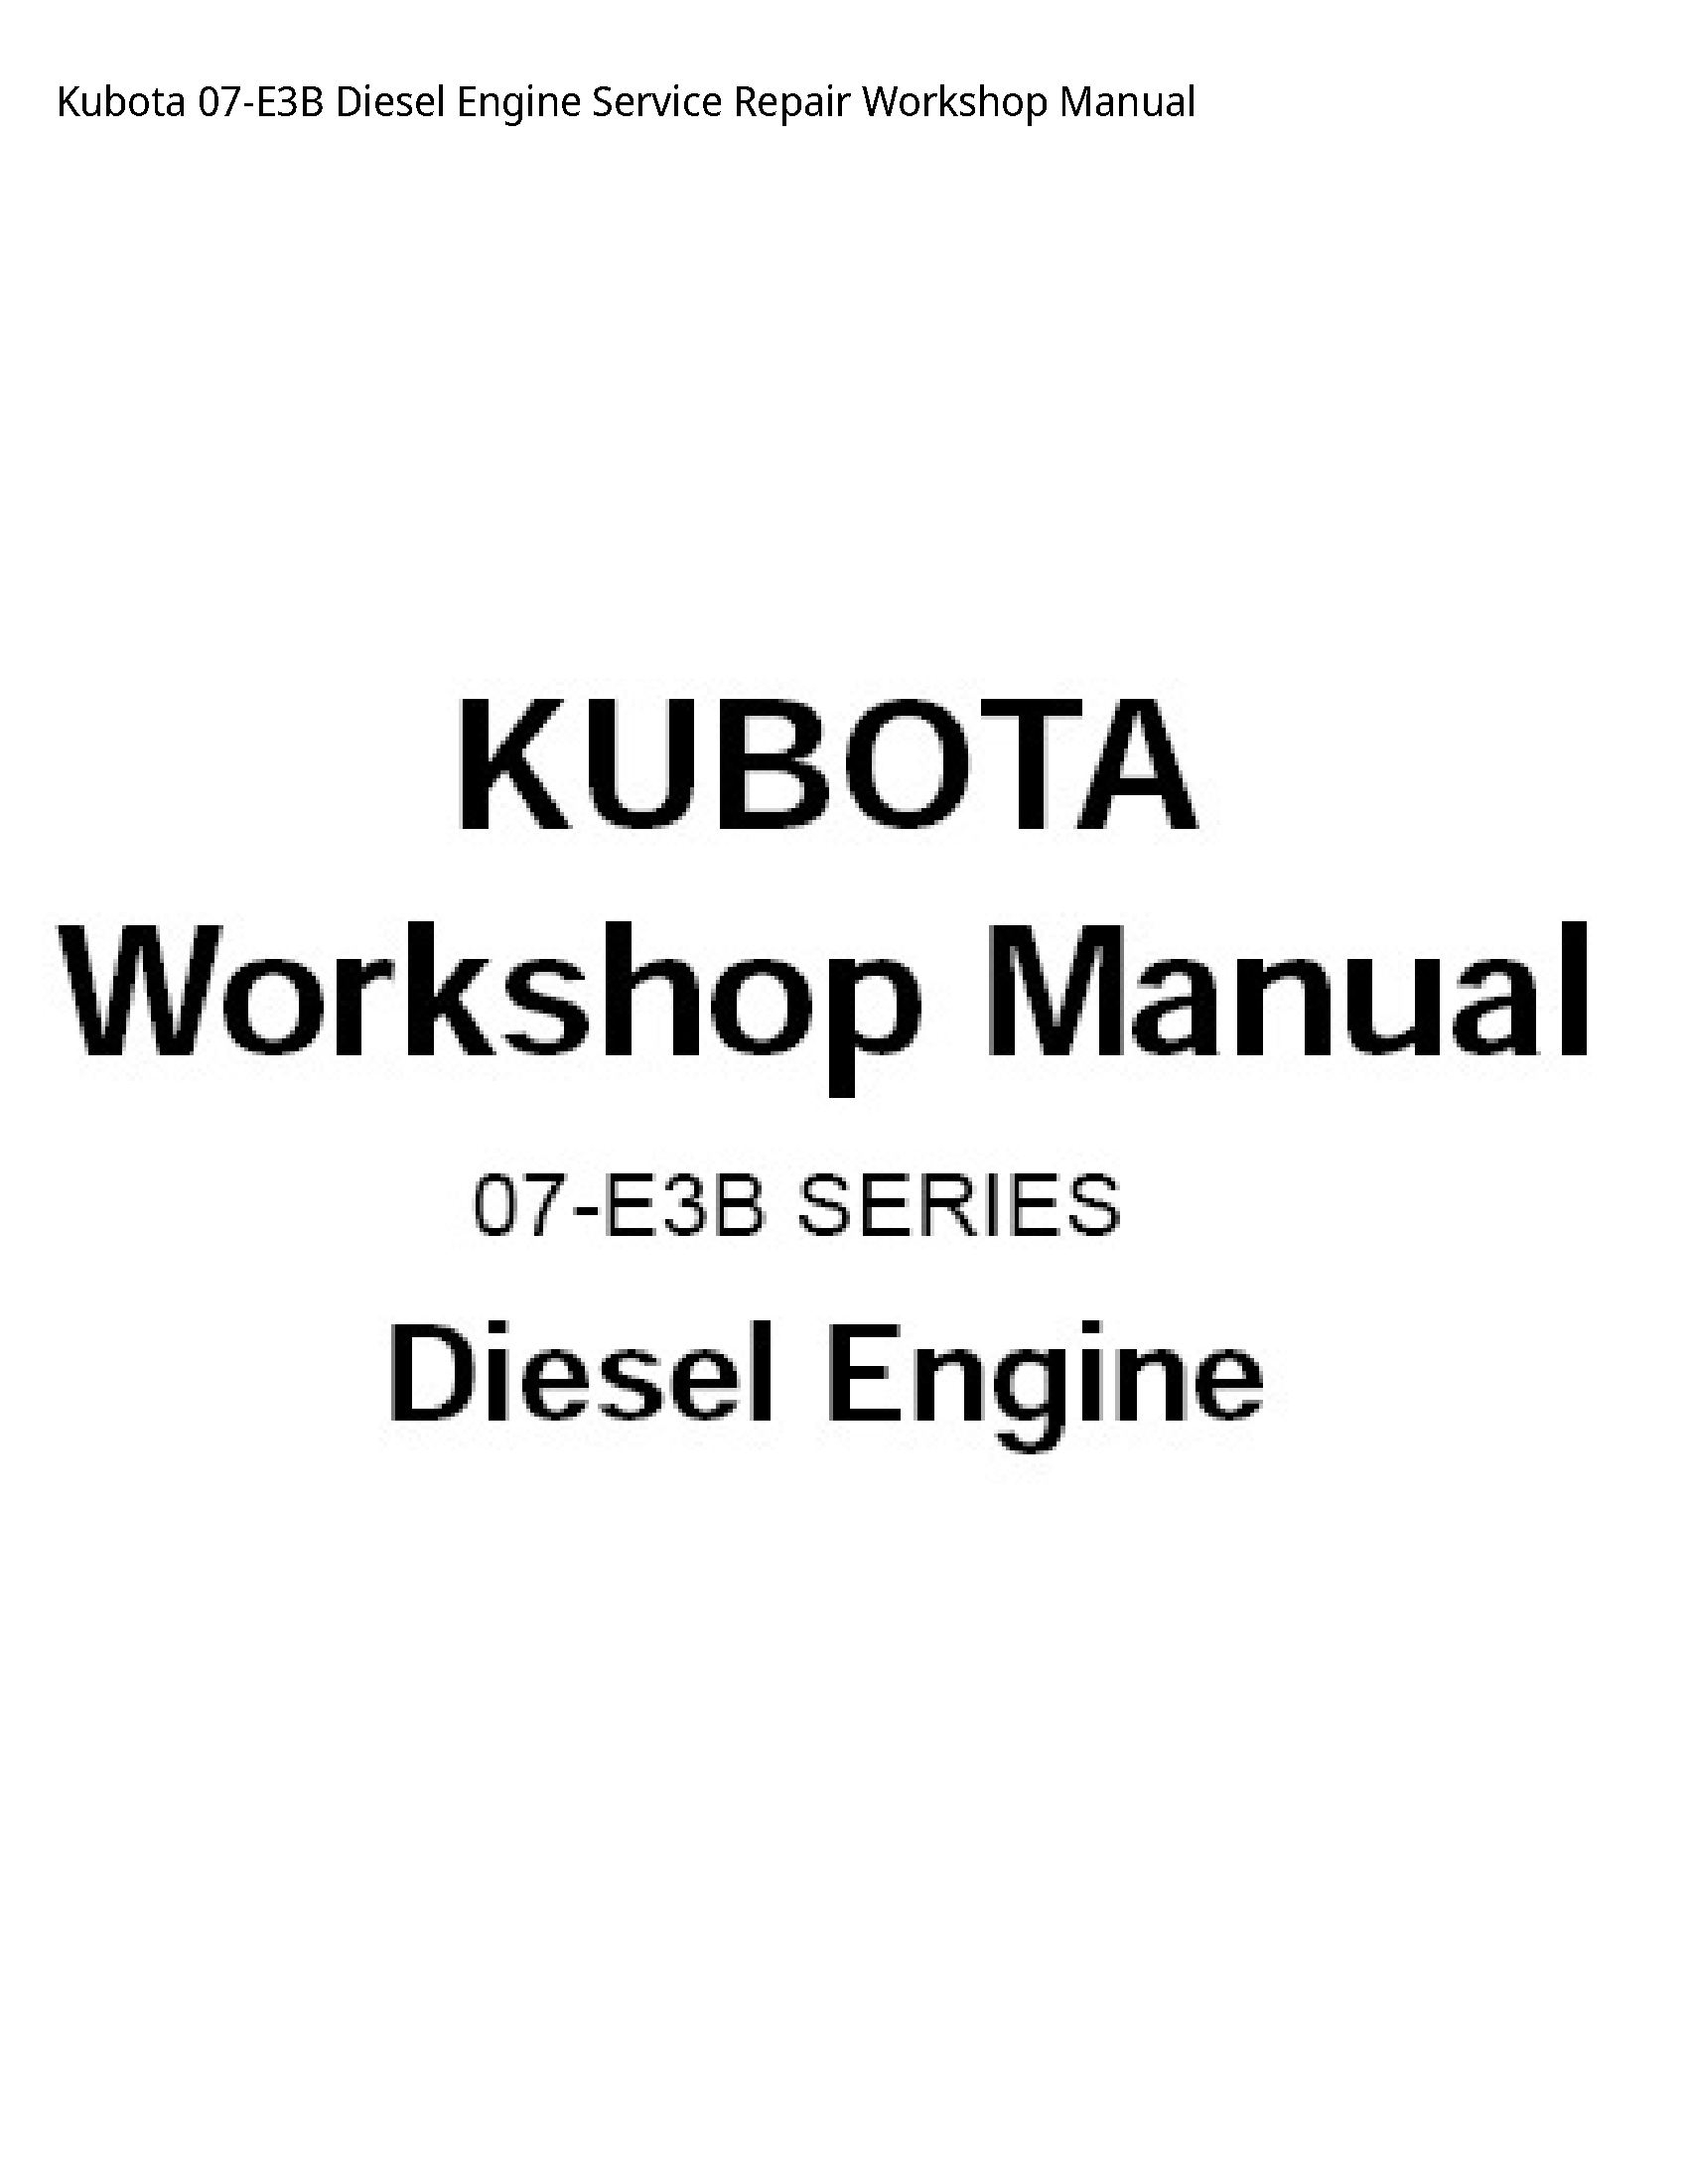 Kubota 07-E3B Diesel Engine manual